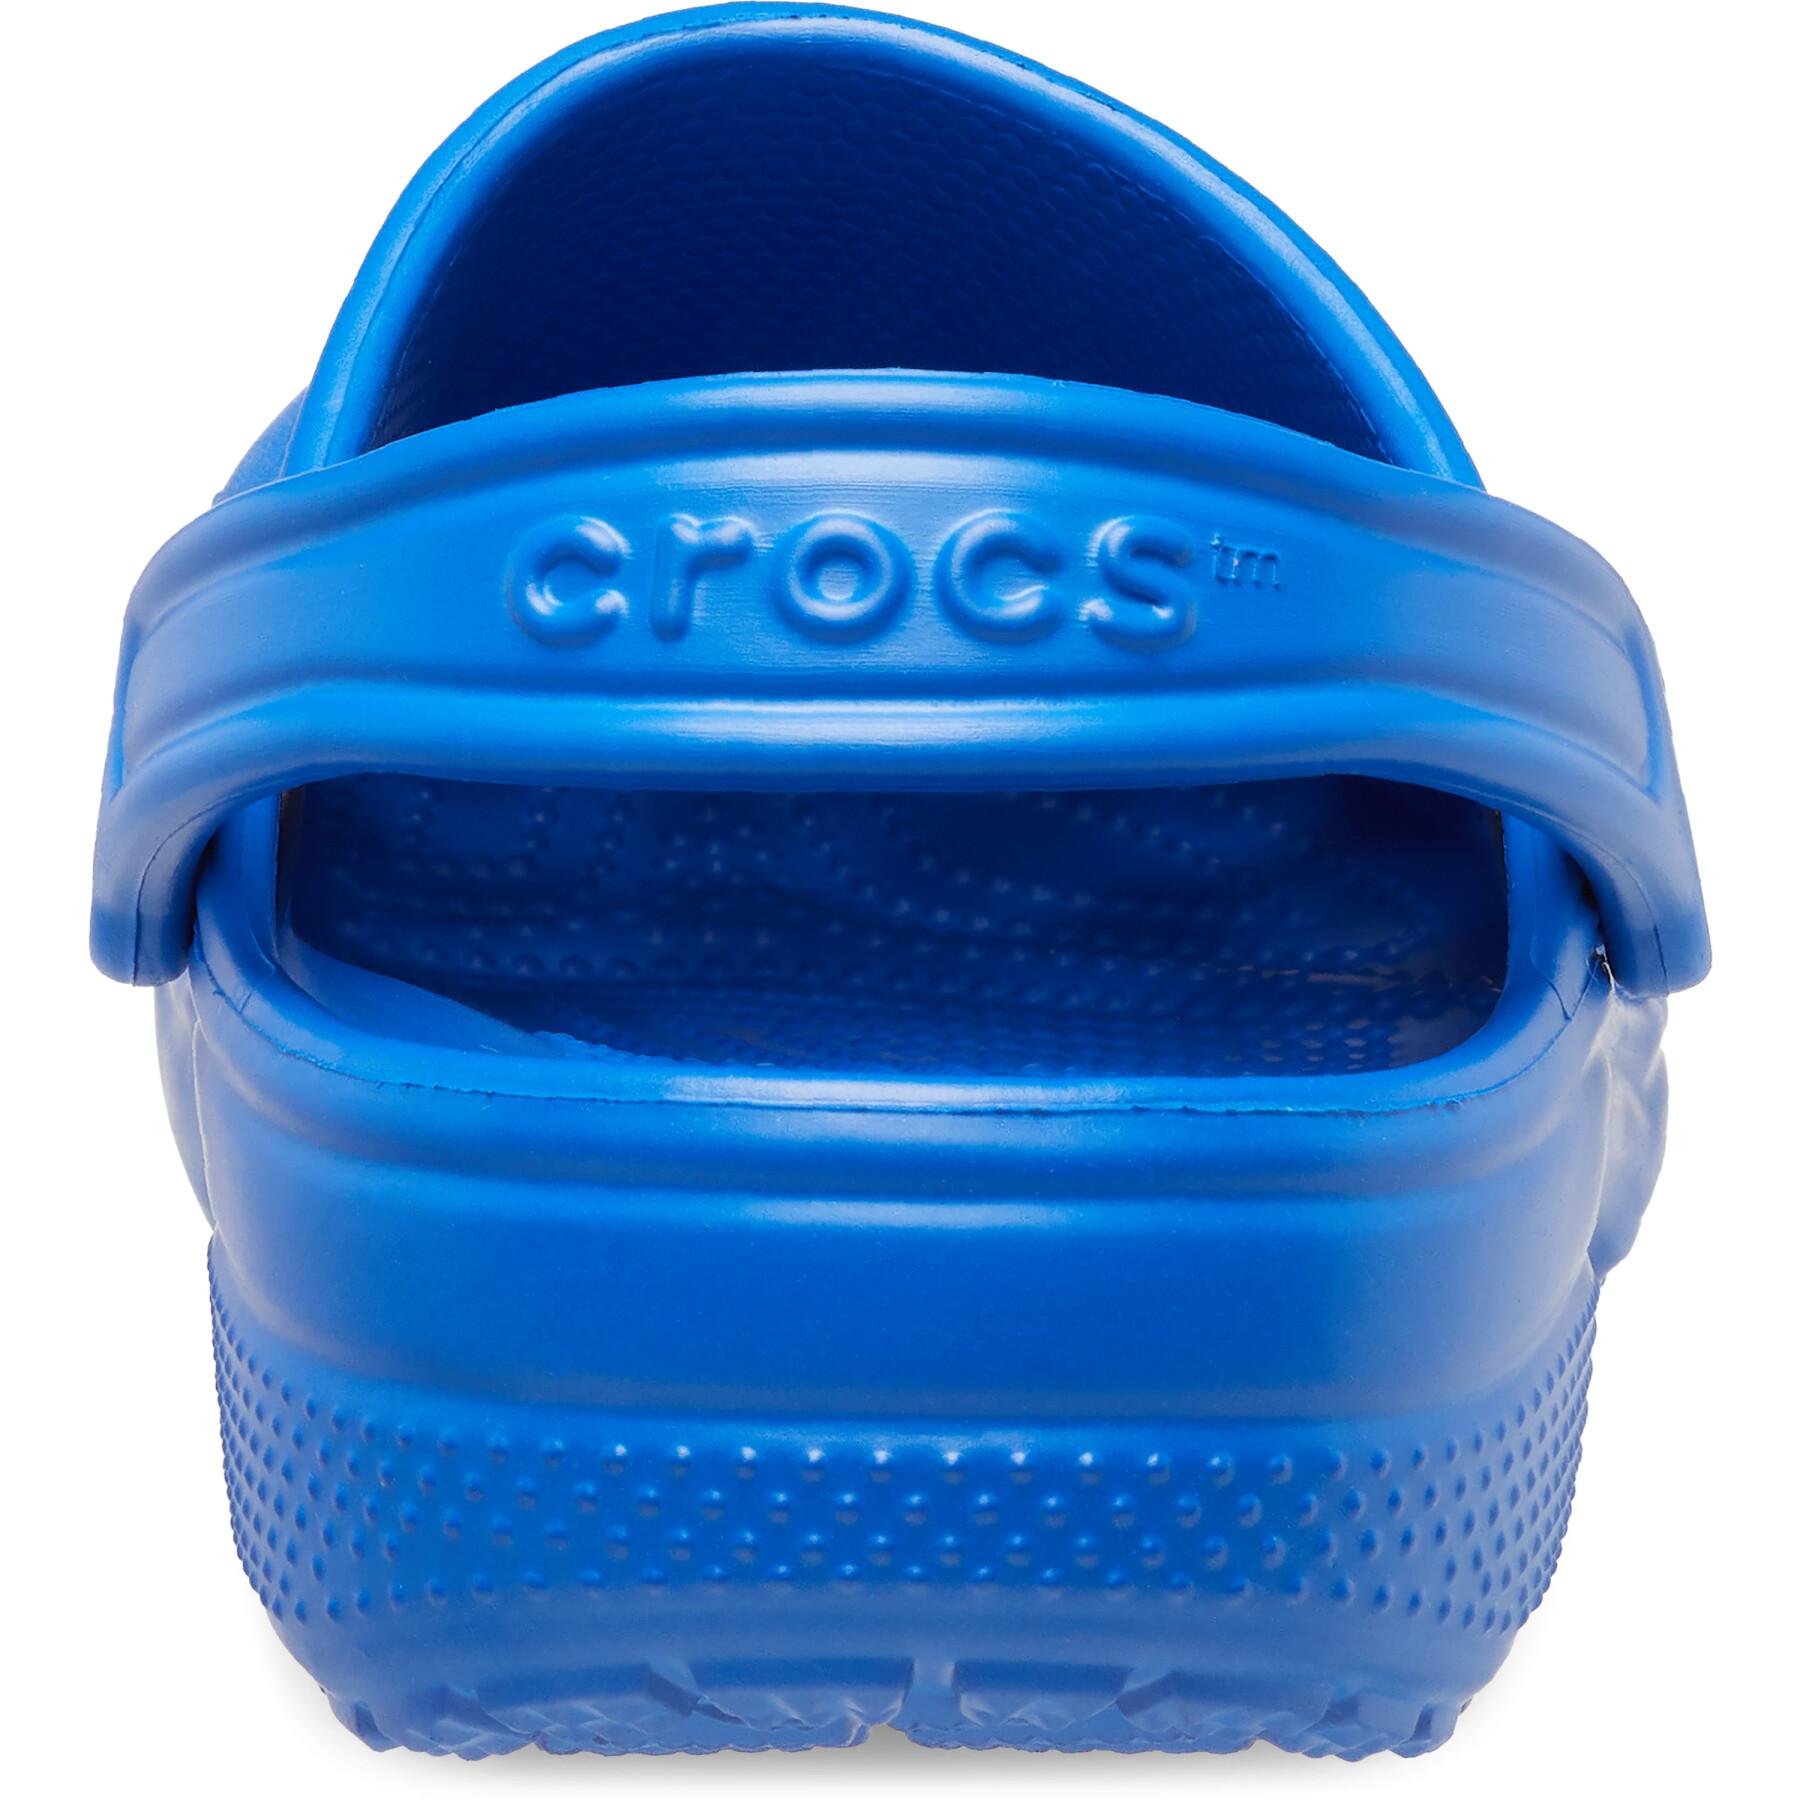 Chodaki Crocs Classic